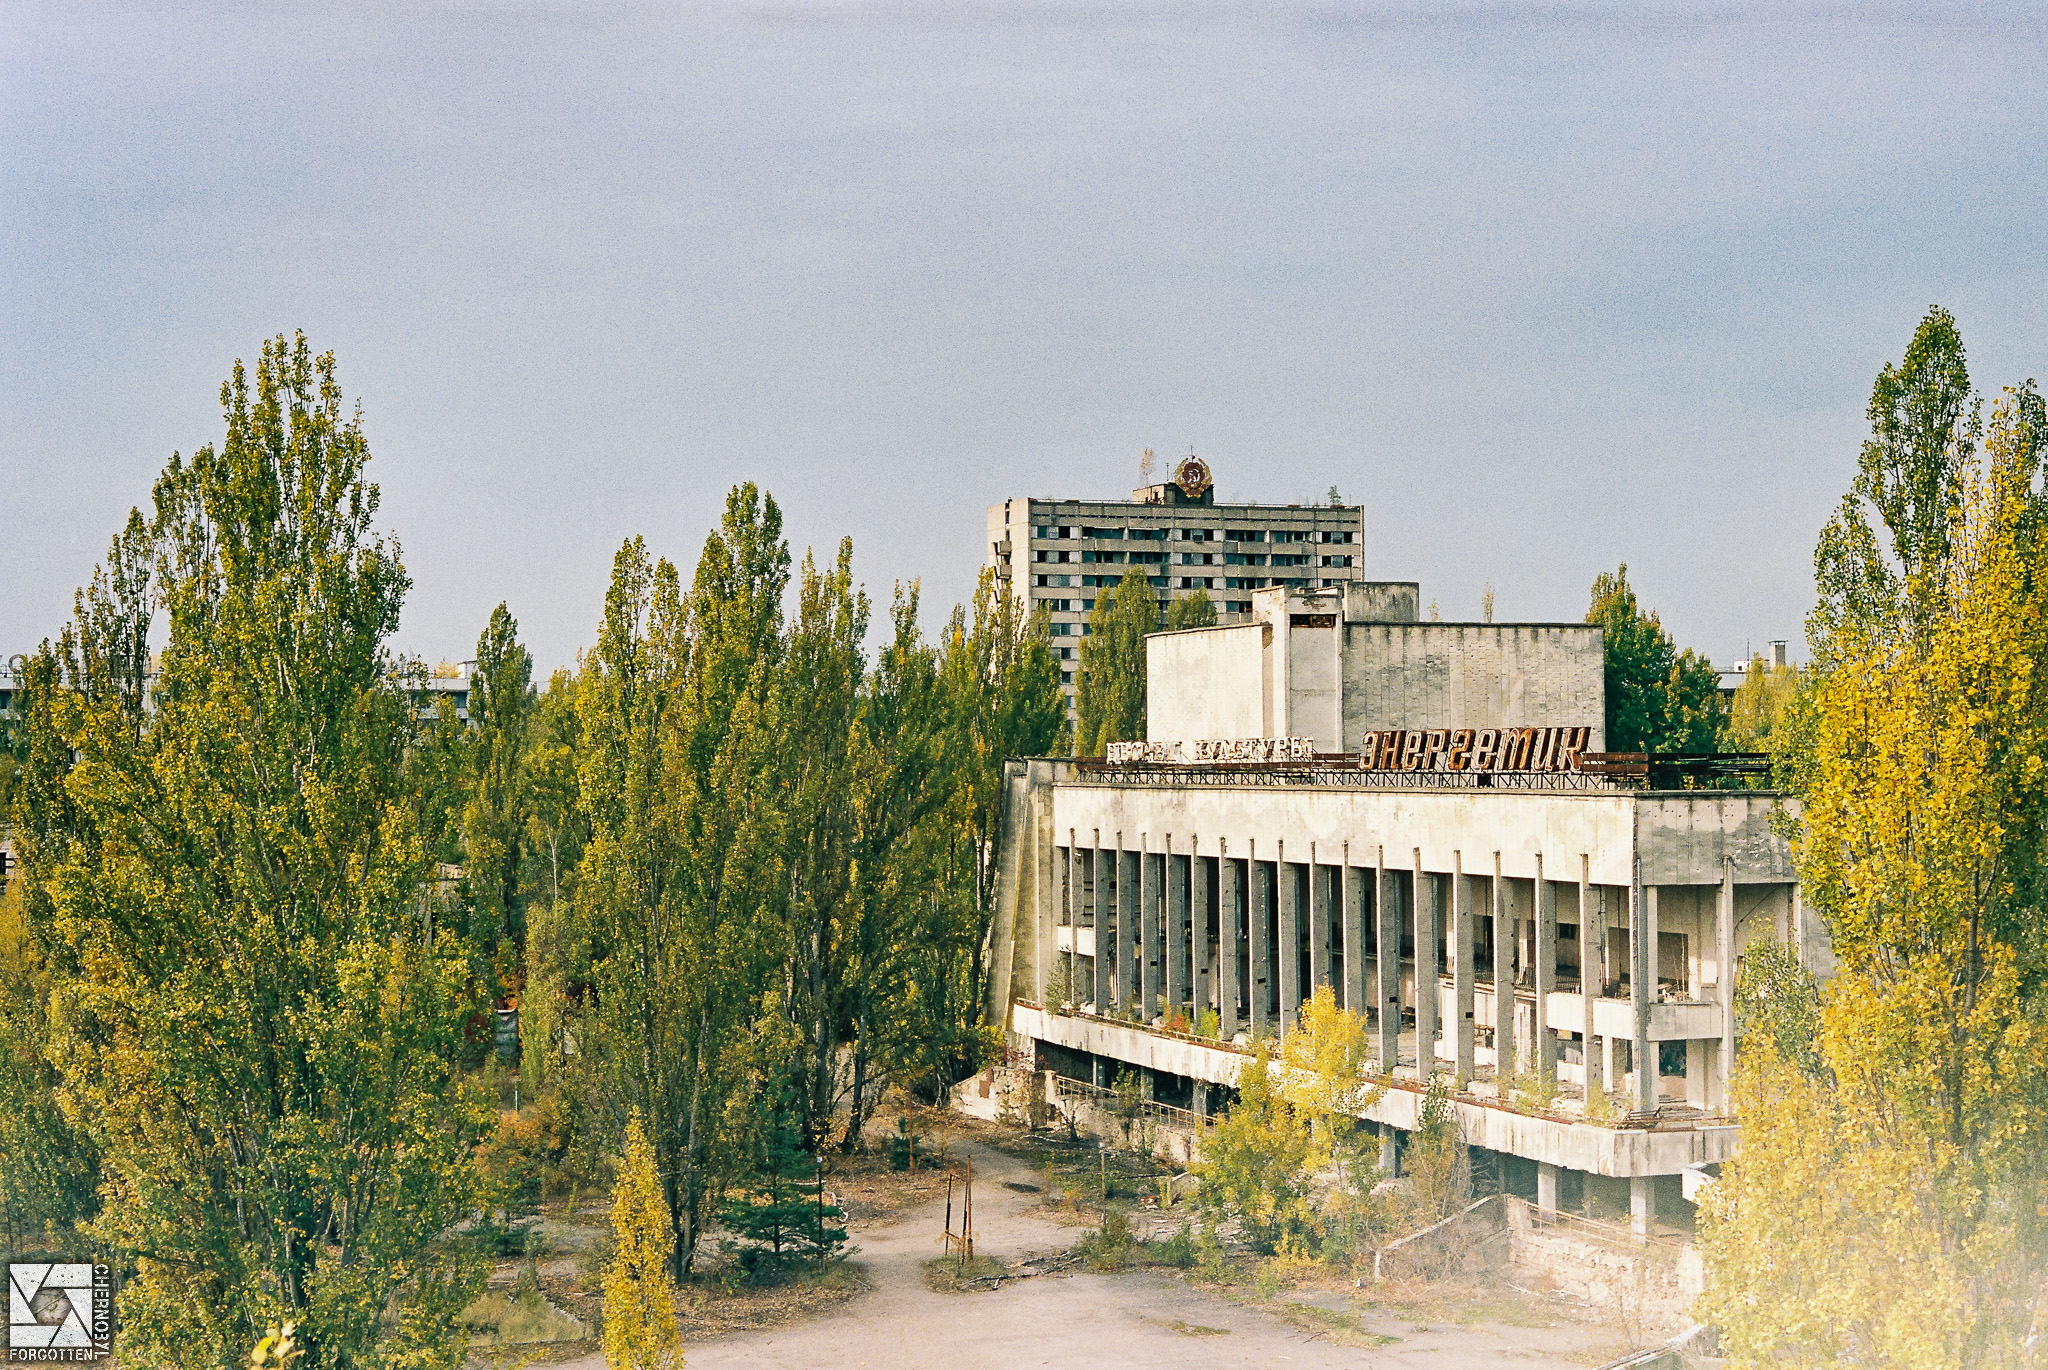 Lenin Square, Pripyat, on a 35mm film captured with Kiev 4 camera